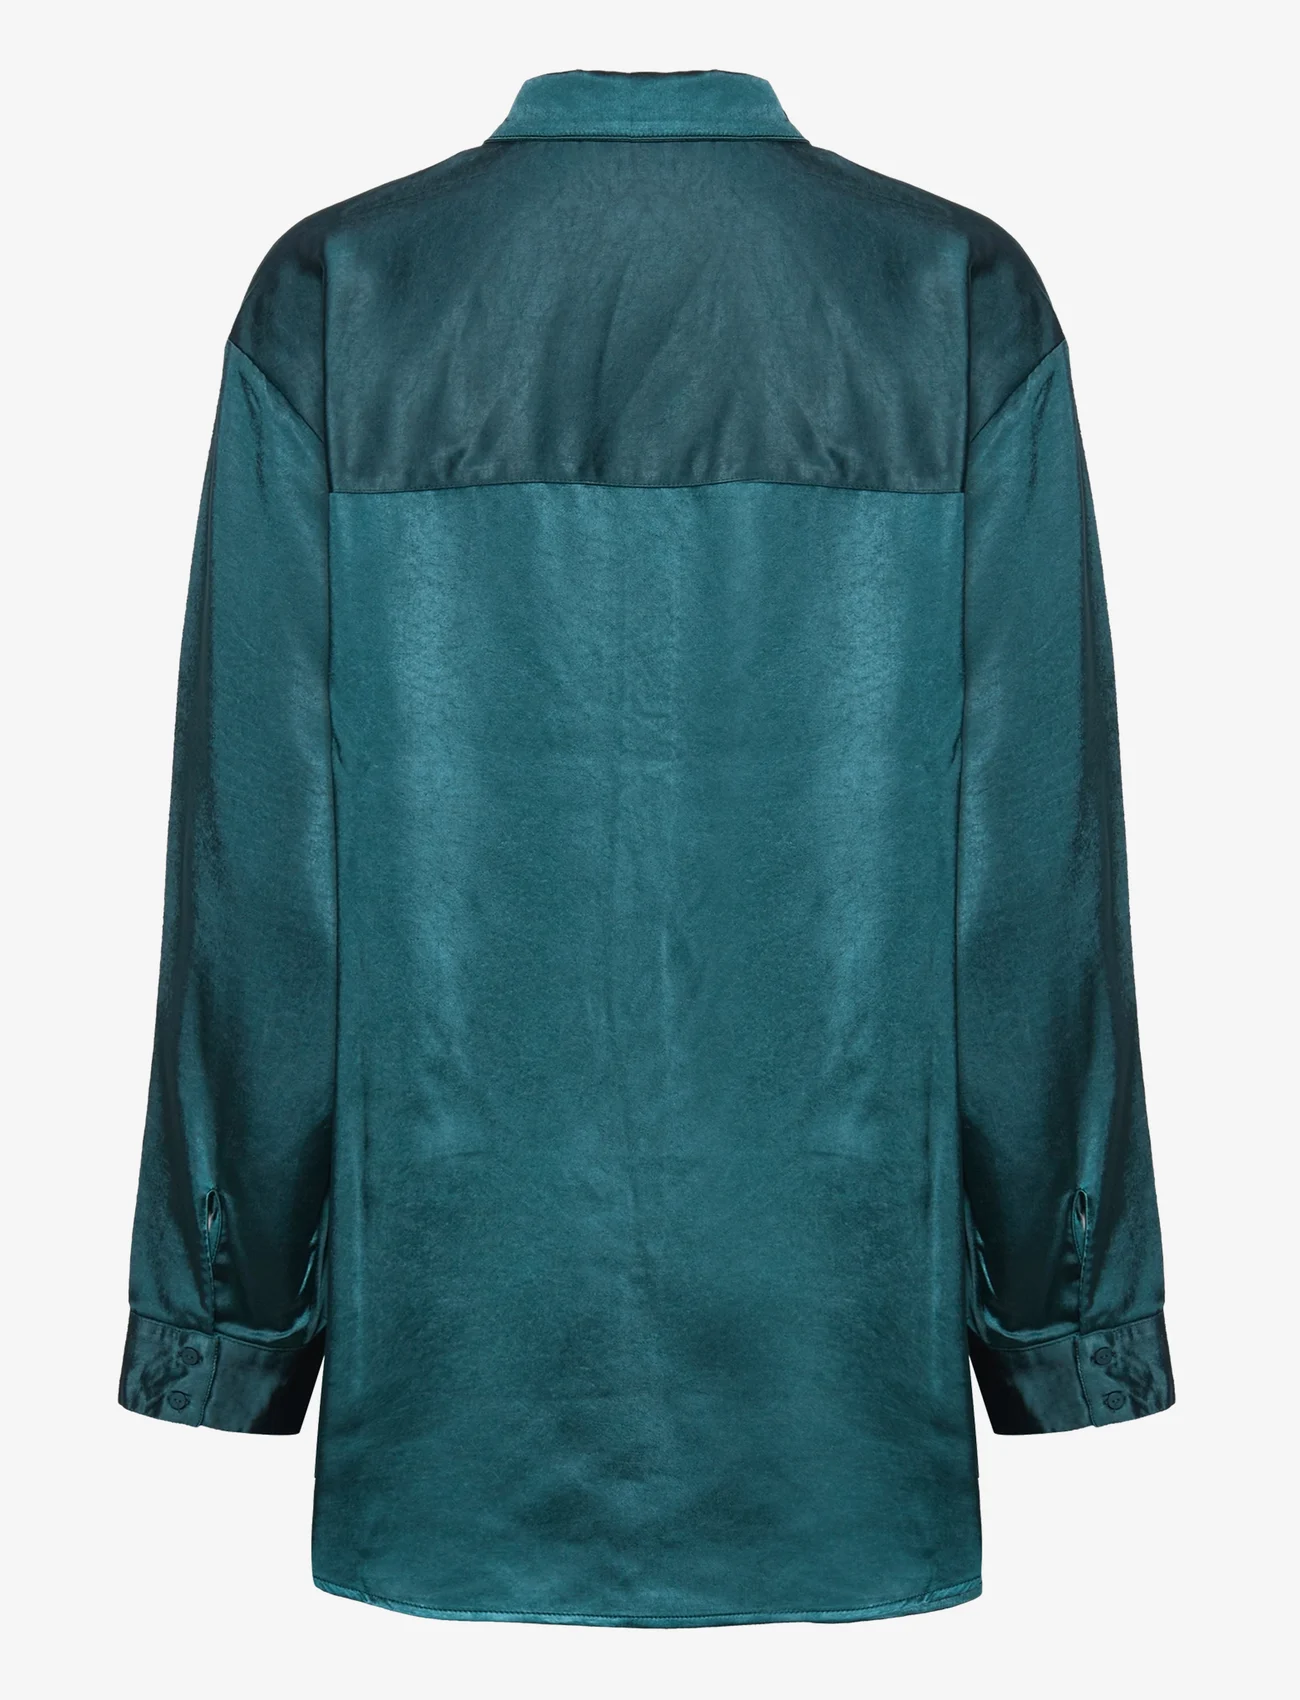 bzr - Satina Utillas shirt - pitkähihaiset paidat - teal green - 1